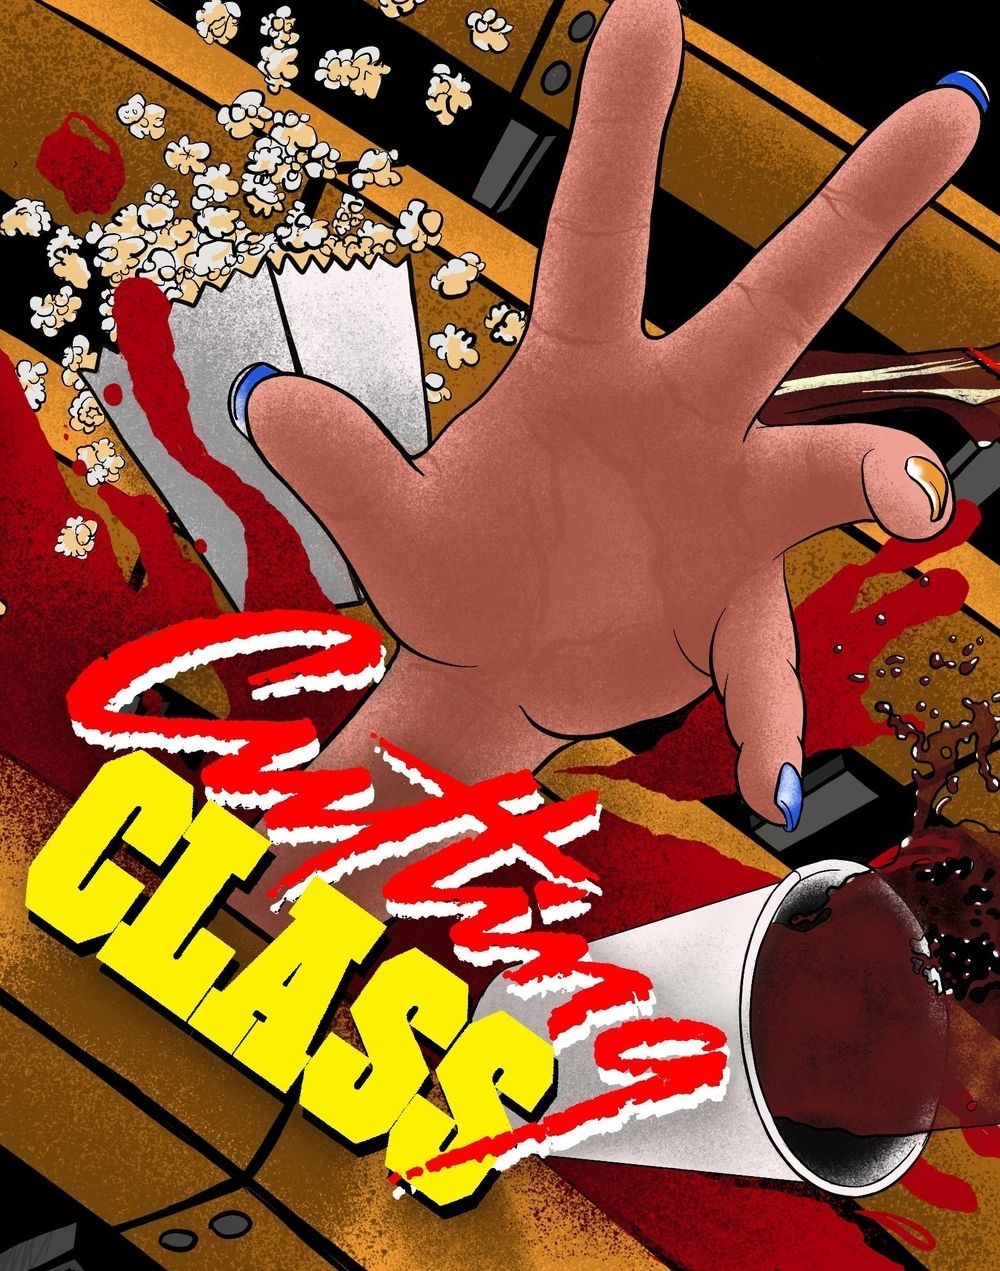 Cutting Class 4K Blu-ray Cover #3